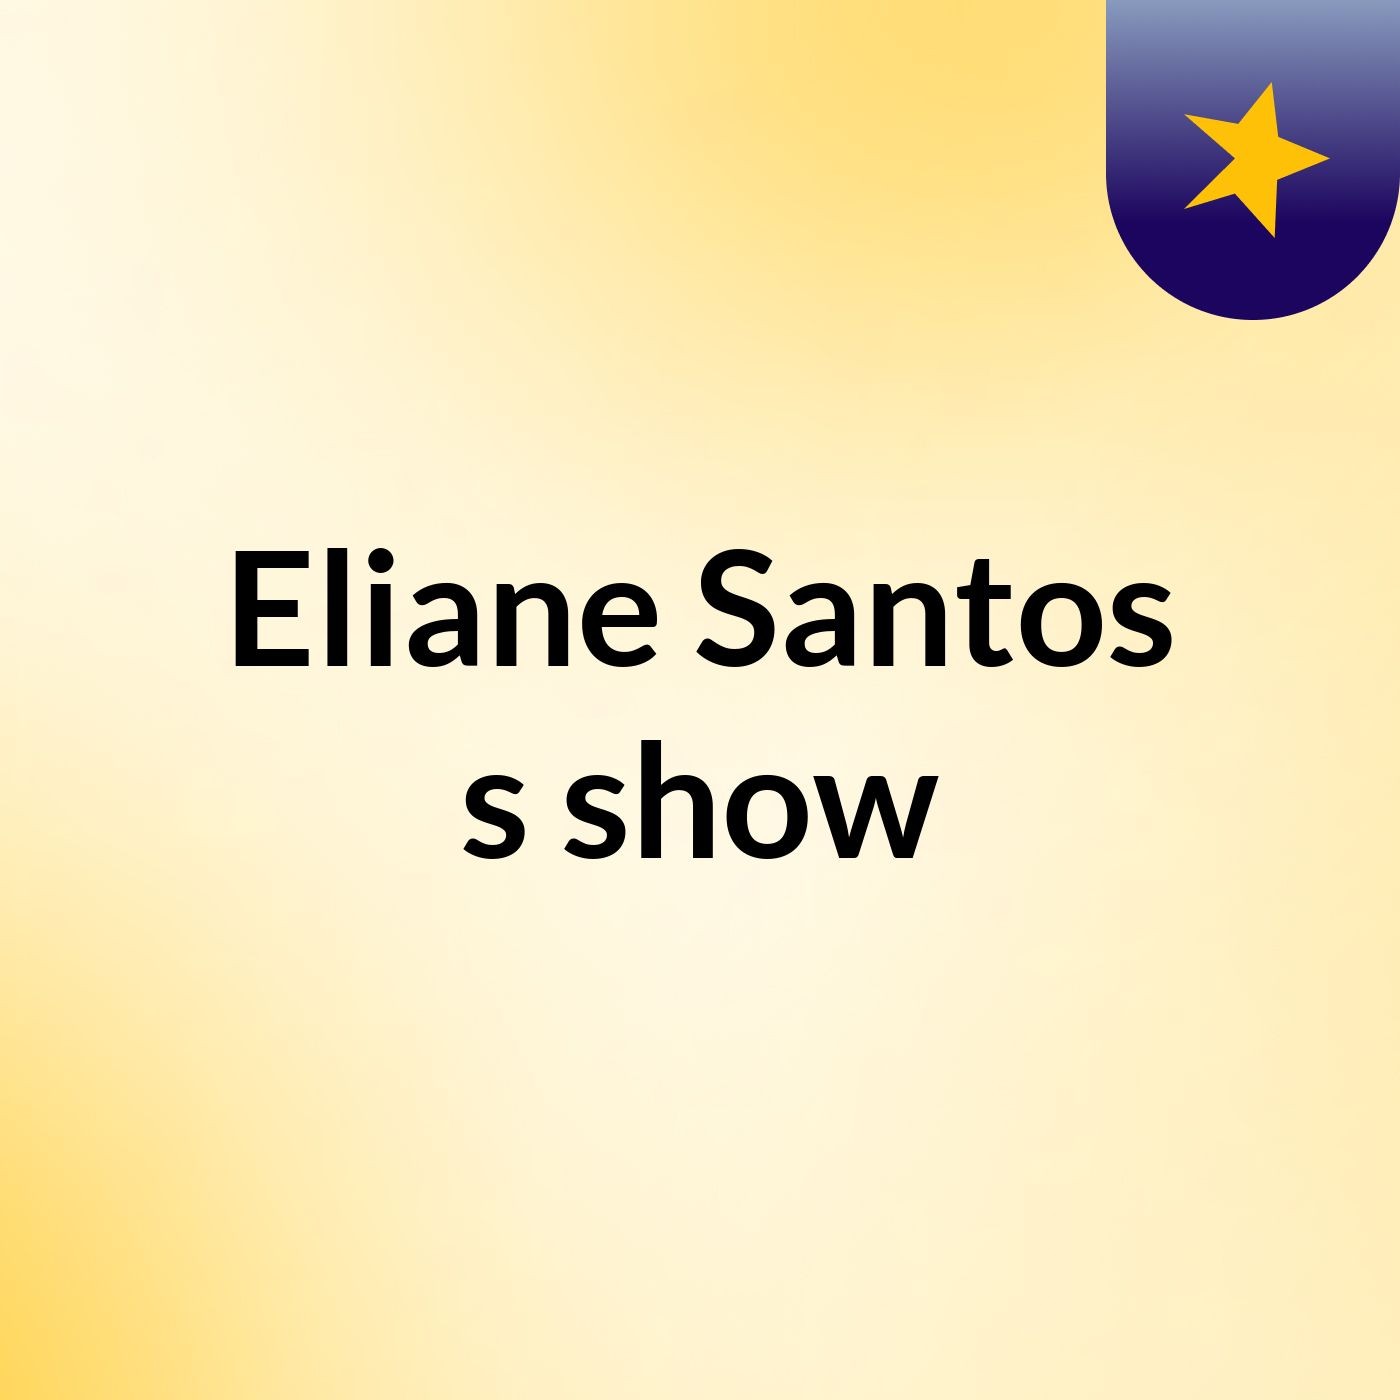 Eliane Santos's show